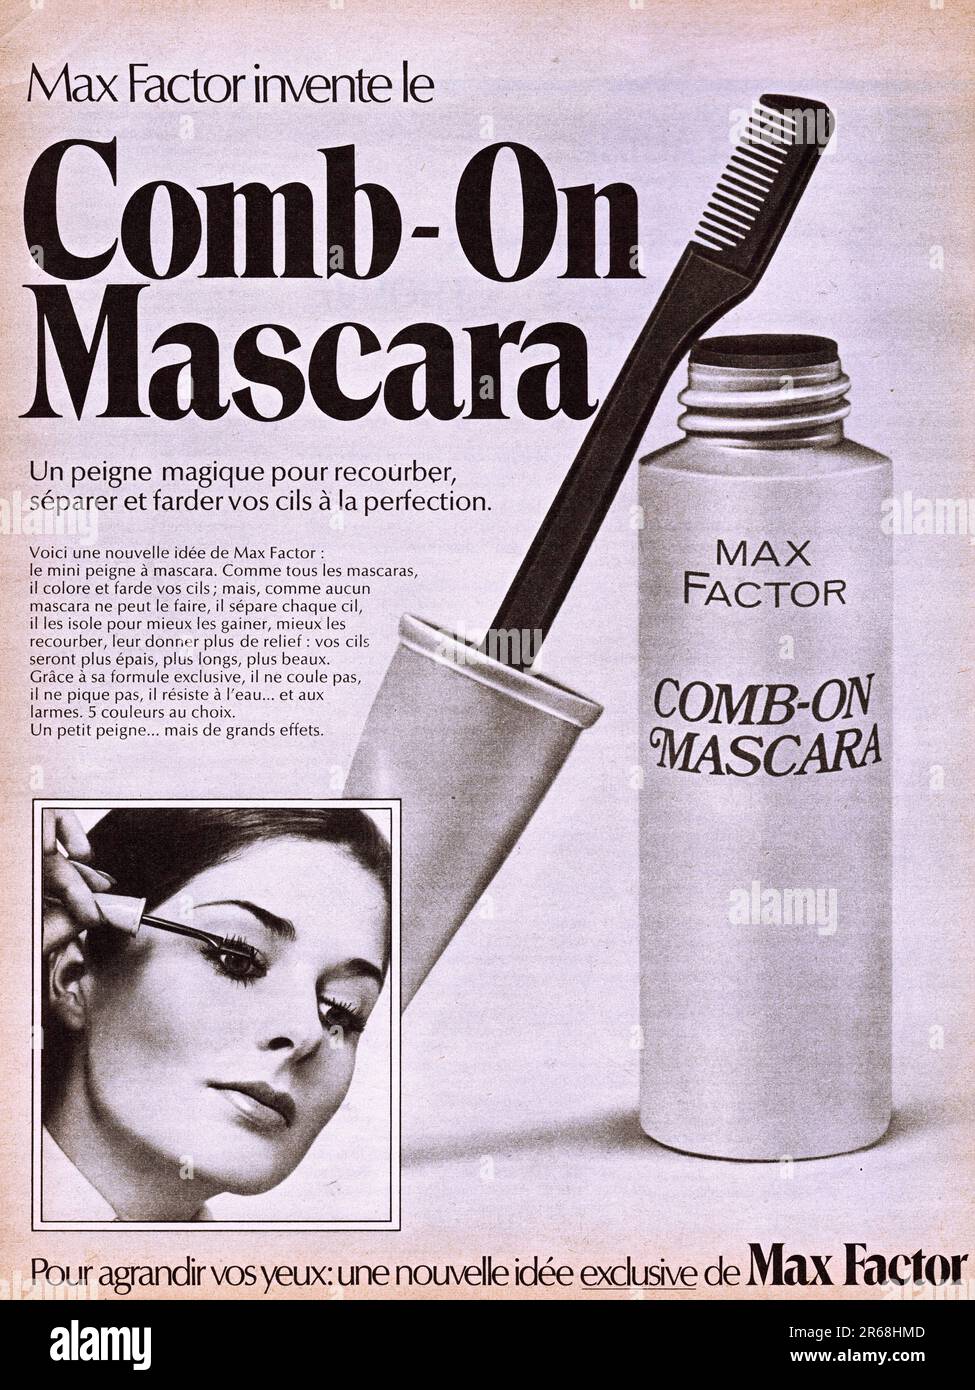 Max Factor Comb-on mascara publicite Max Factor comb-on mascara vintage magazine advertisement Max Factor advertisement Stock Photo